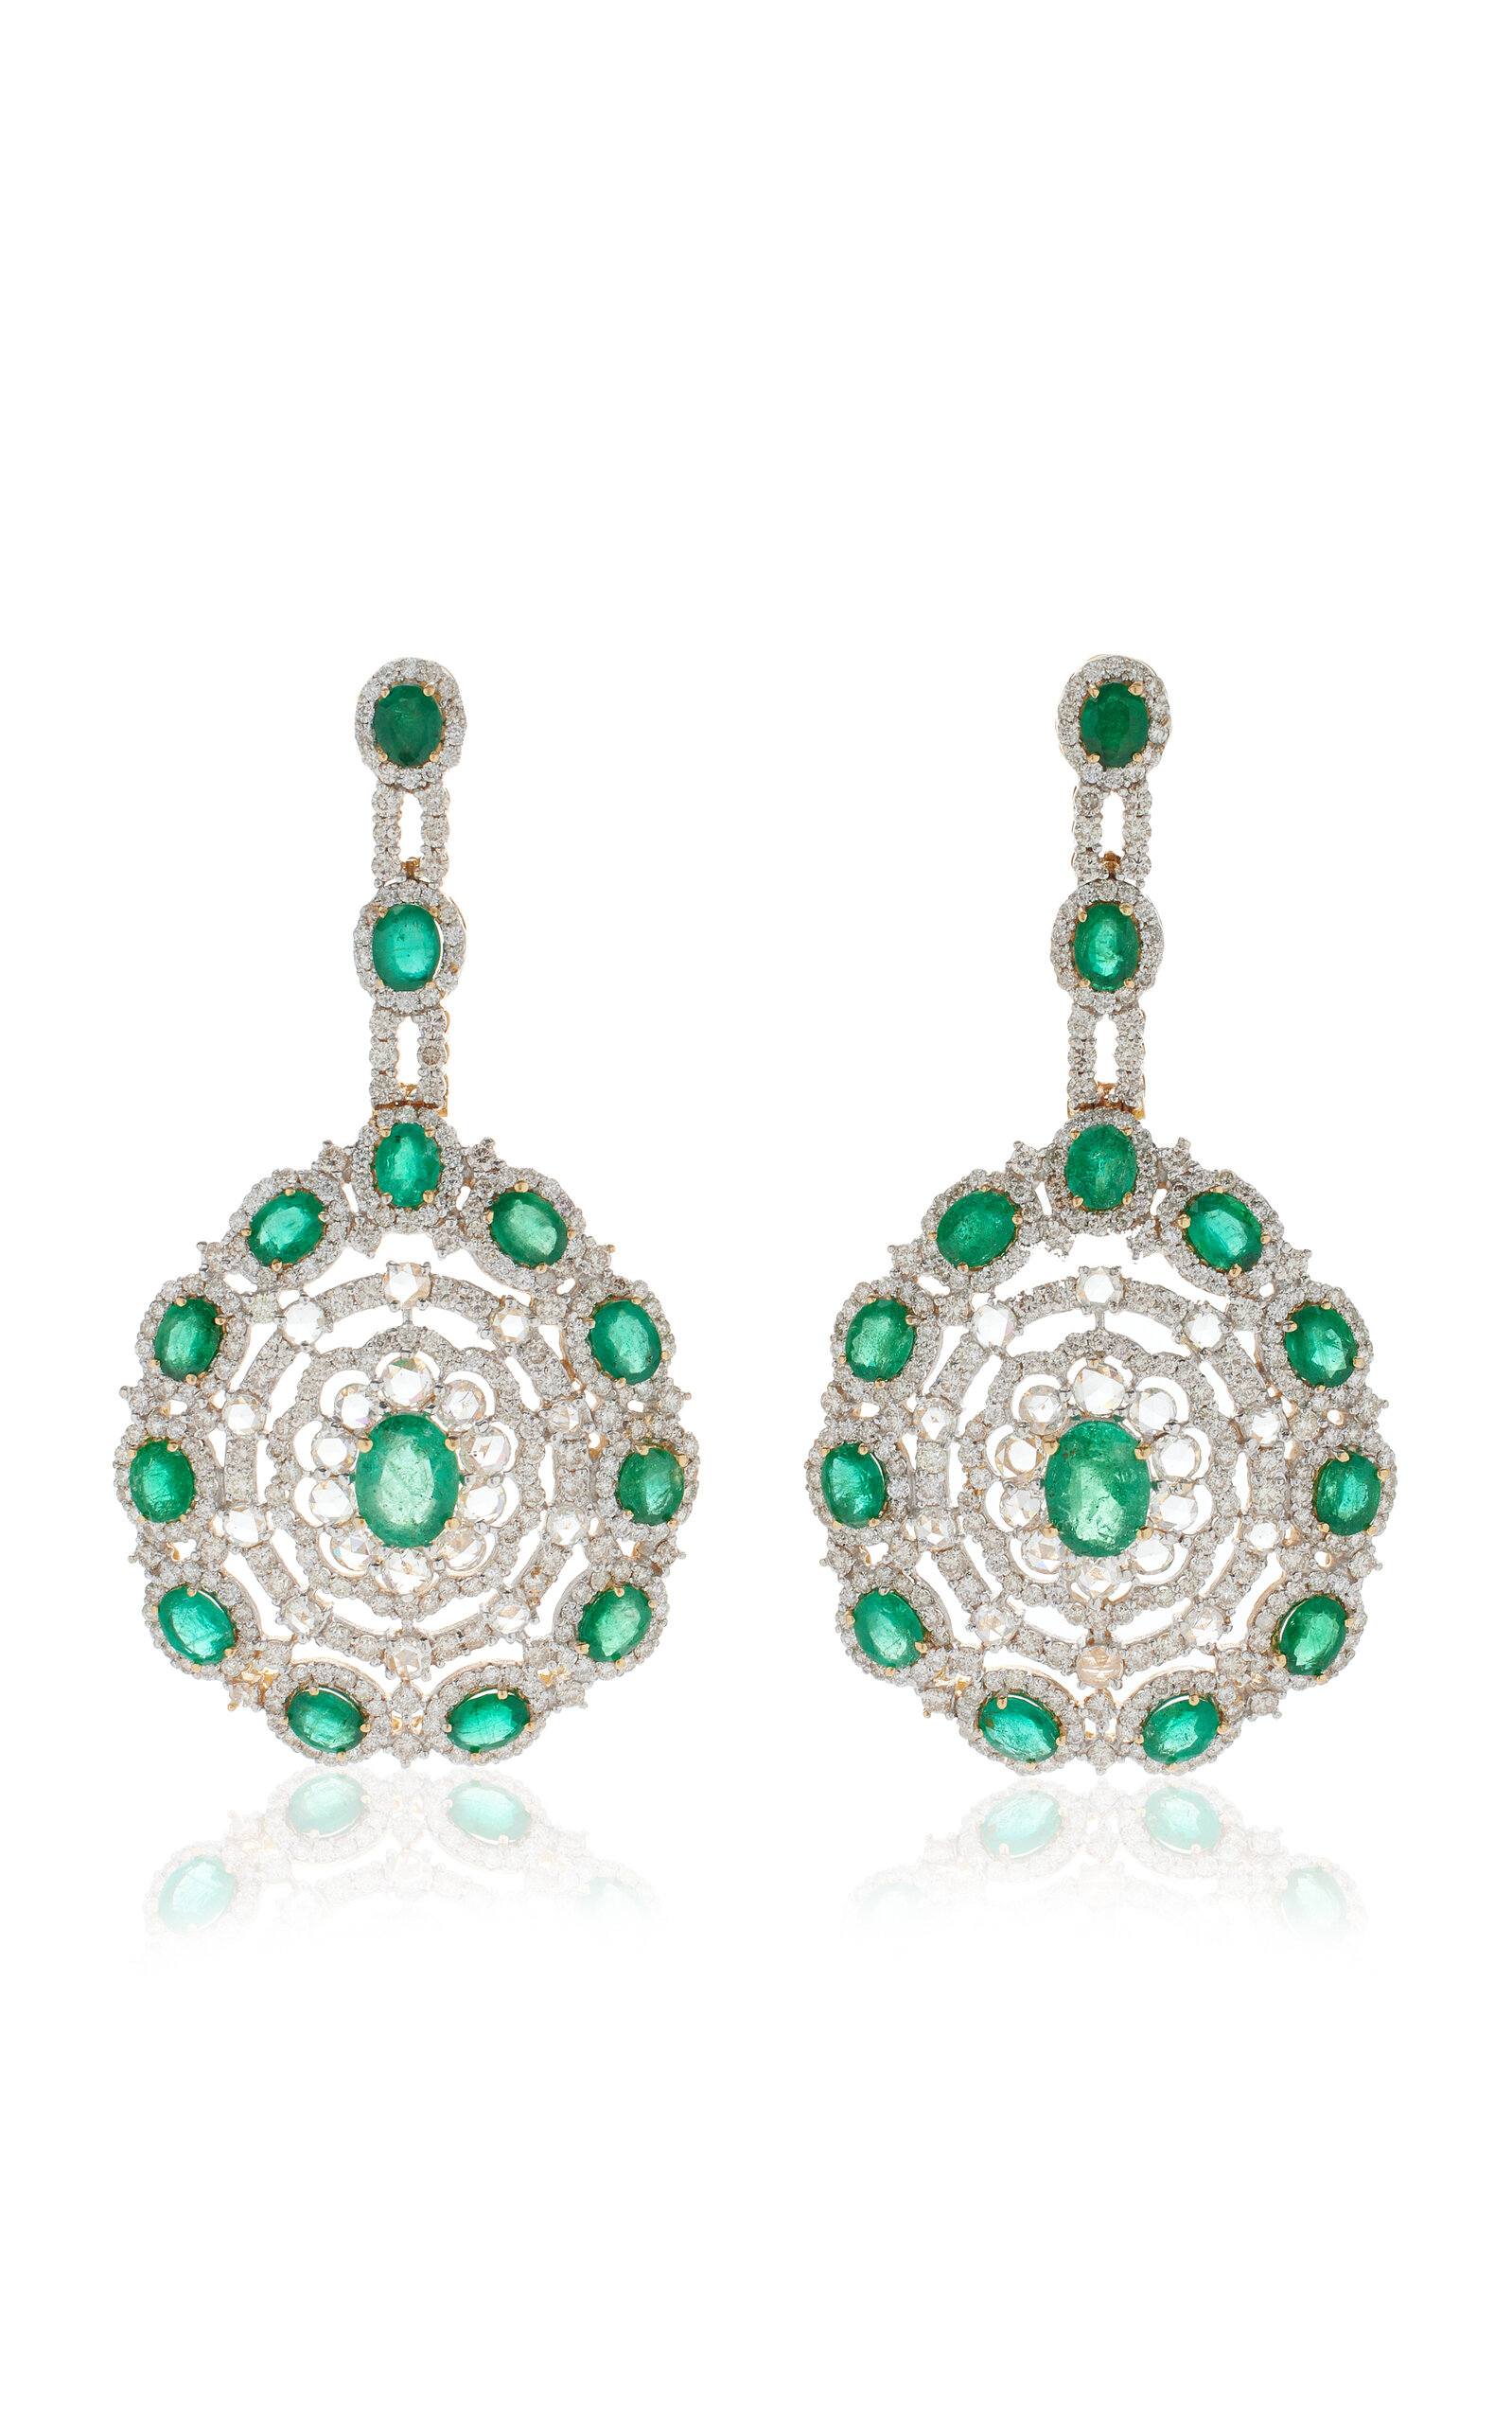 Amrapali One of a Kind 18K White Gold Emerald & Diamond Blossom Earrings